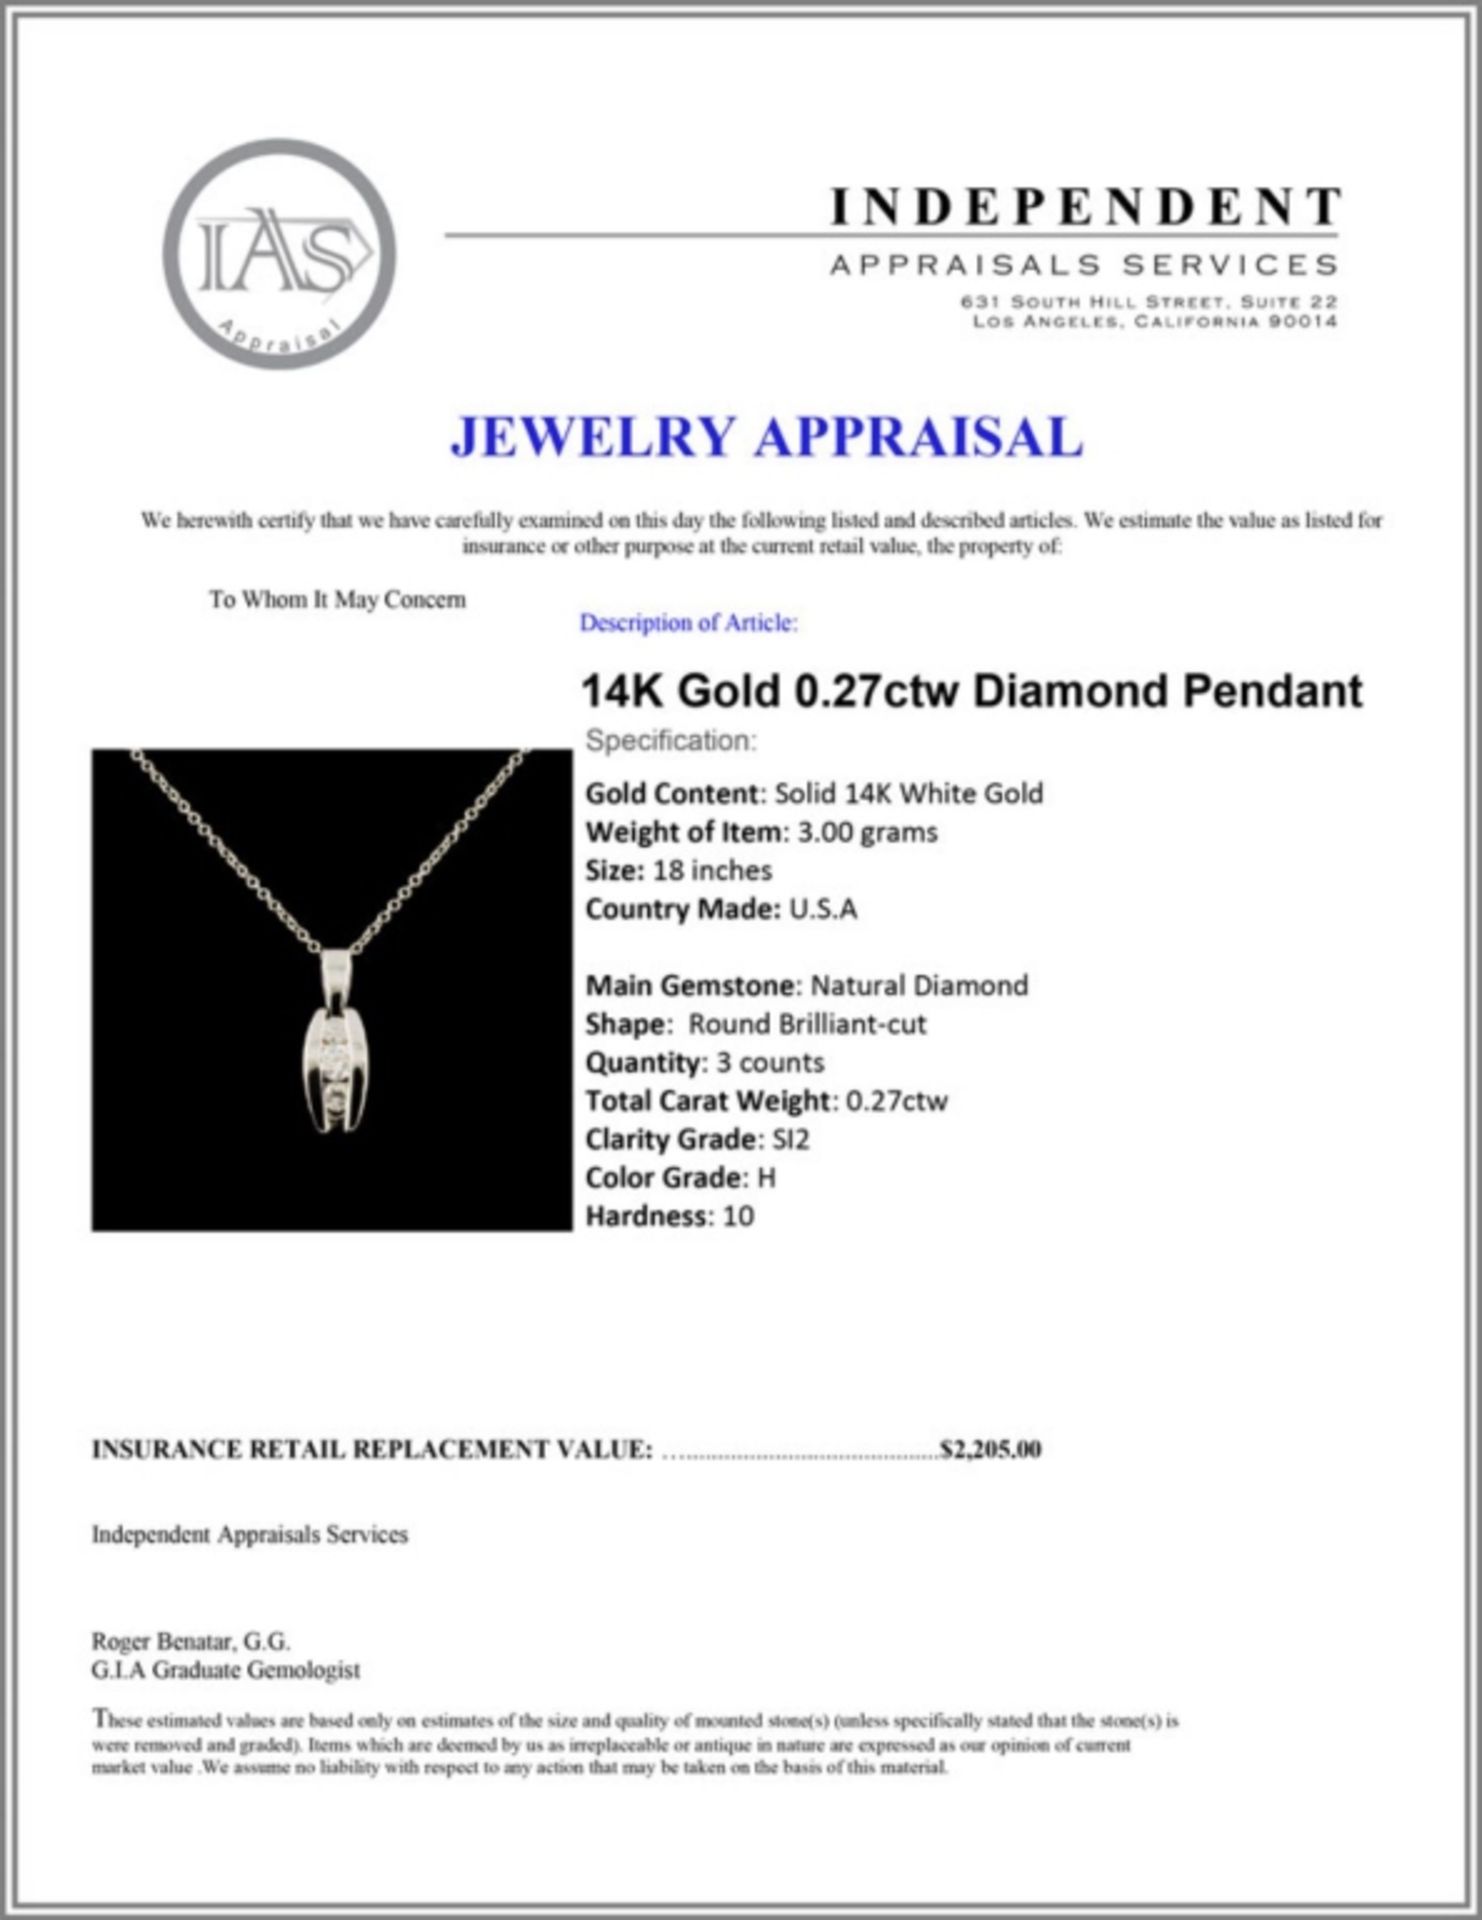 14K Gold 0.27ctw Diamond Pendant - Image 4 of 4